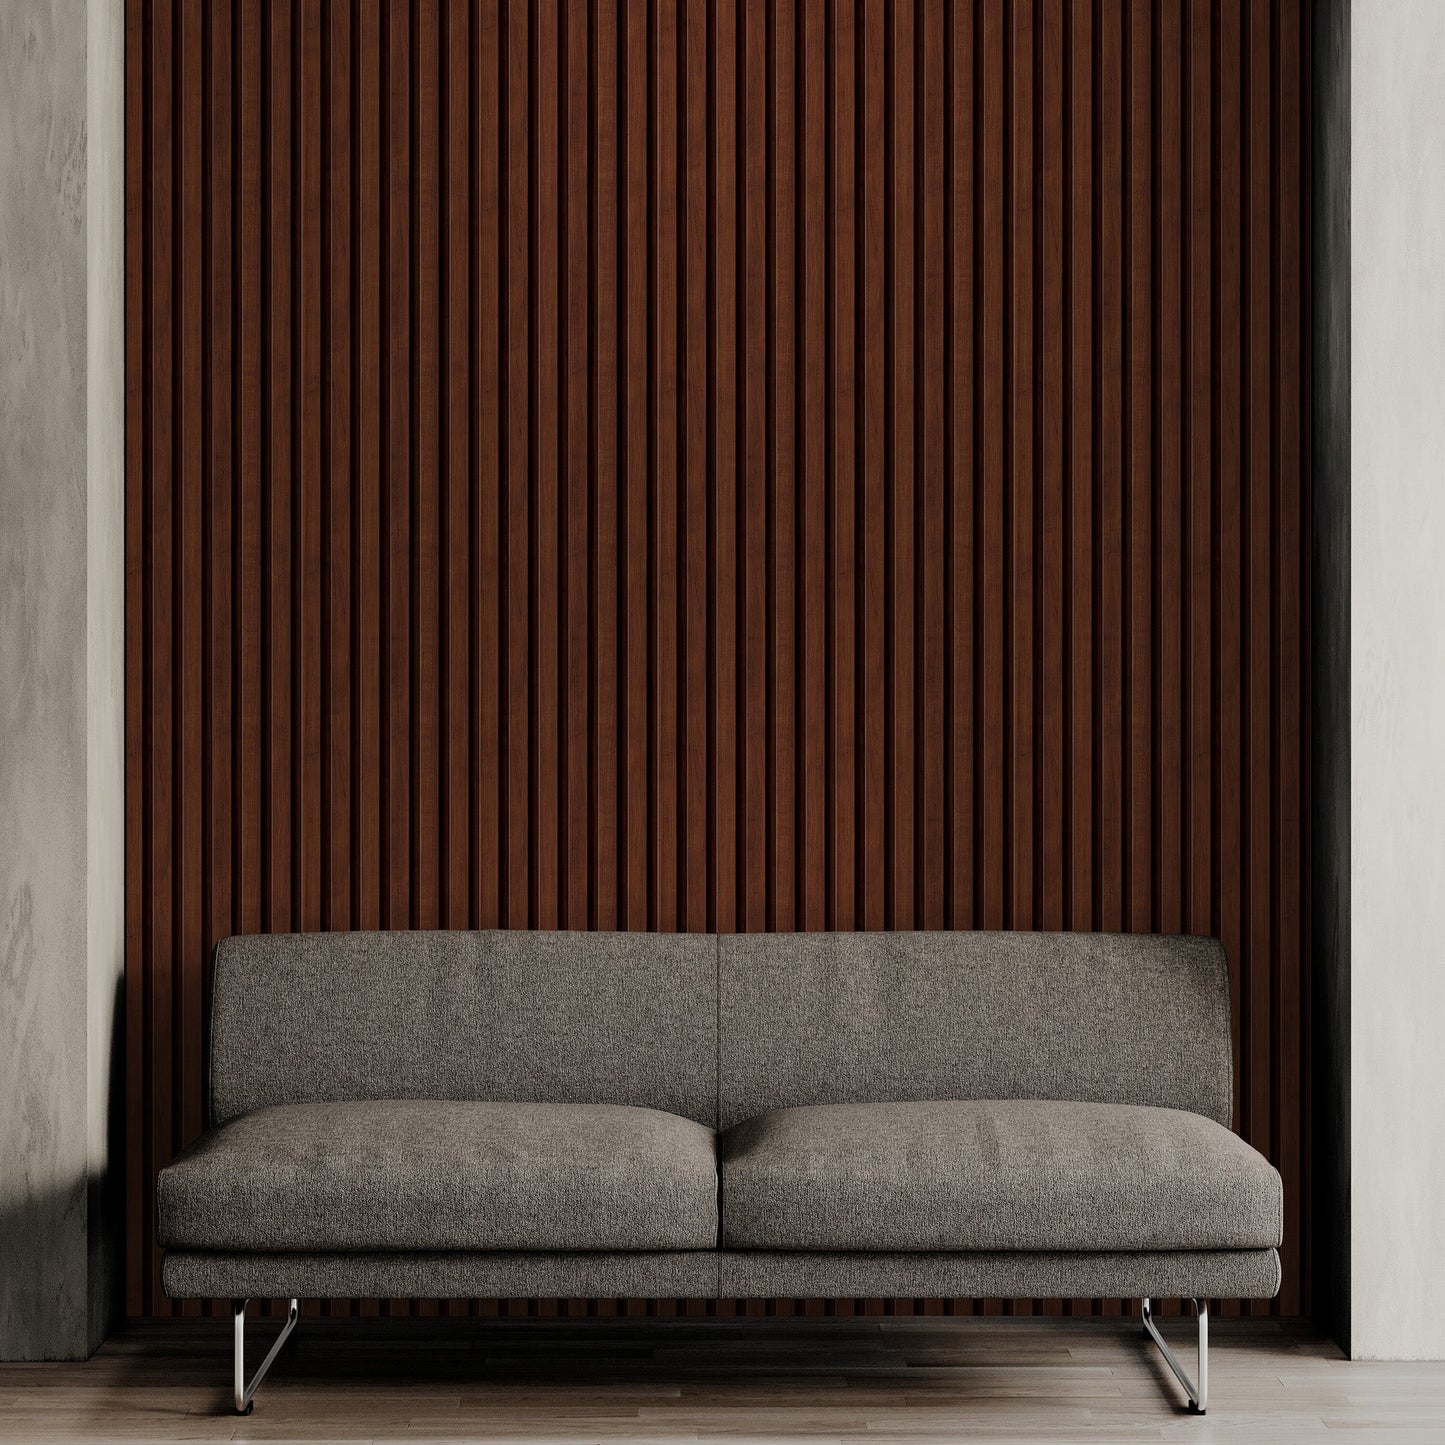 Wooden Vertical Panel Wallpaper. Dark Brown Wainscot Hardwood Wall Mural Print. #6734